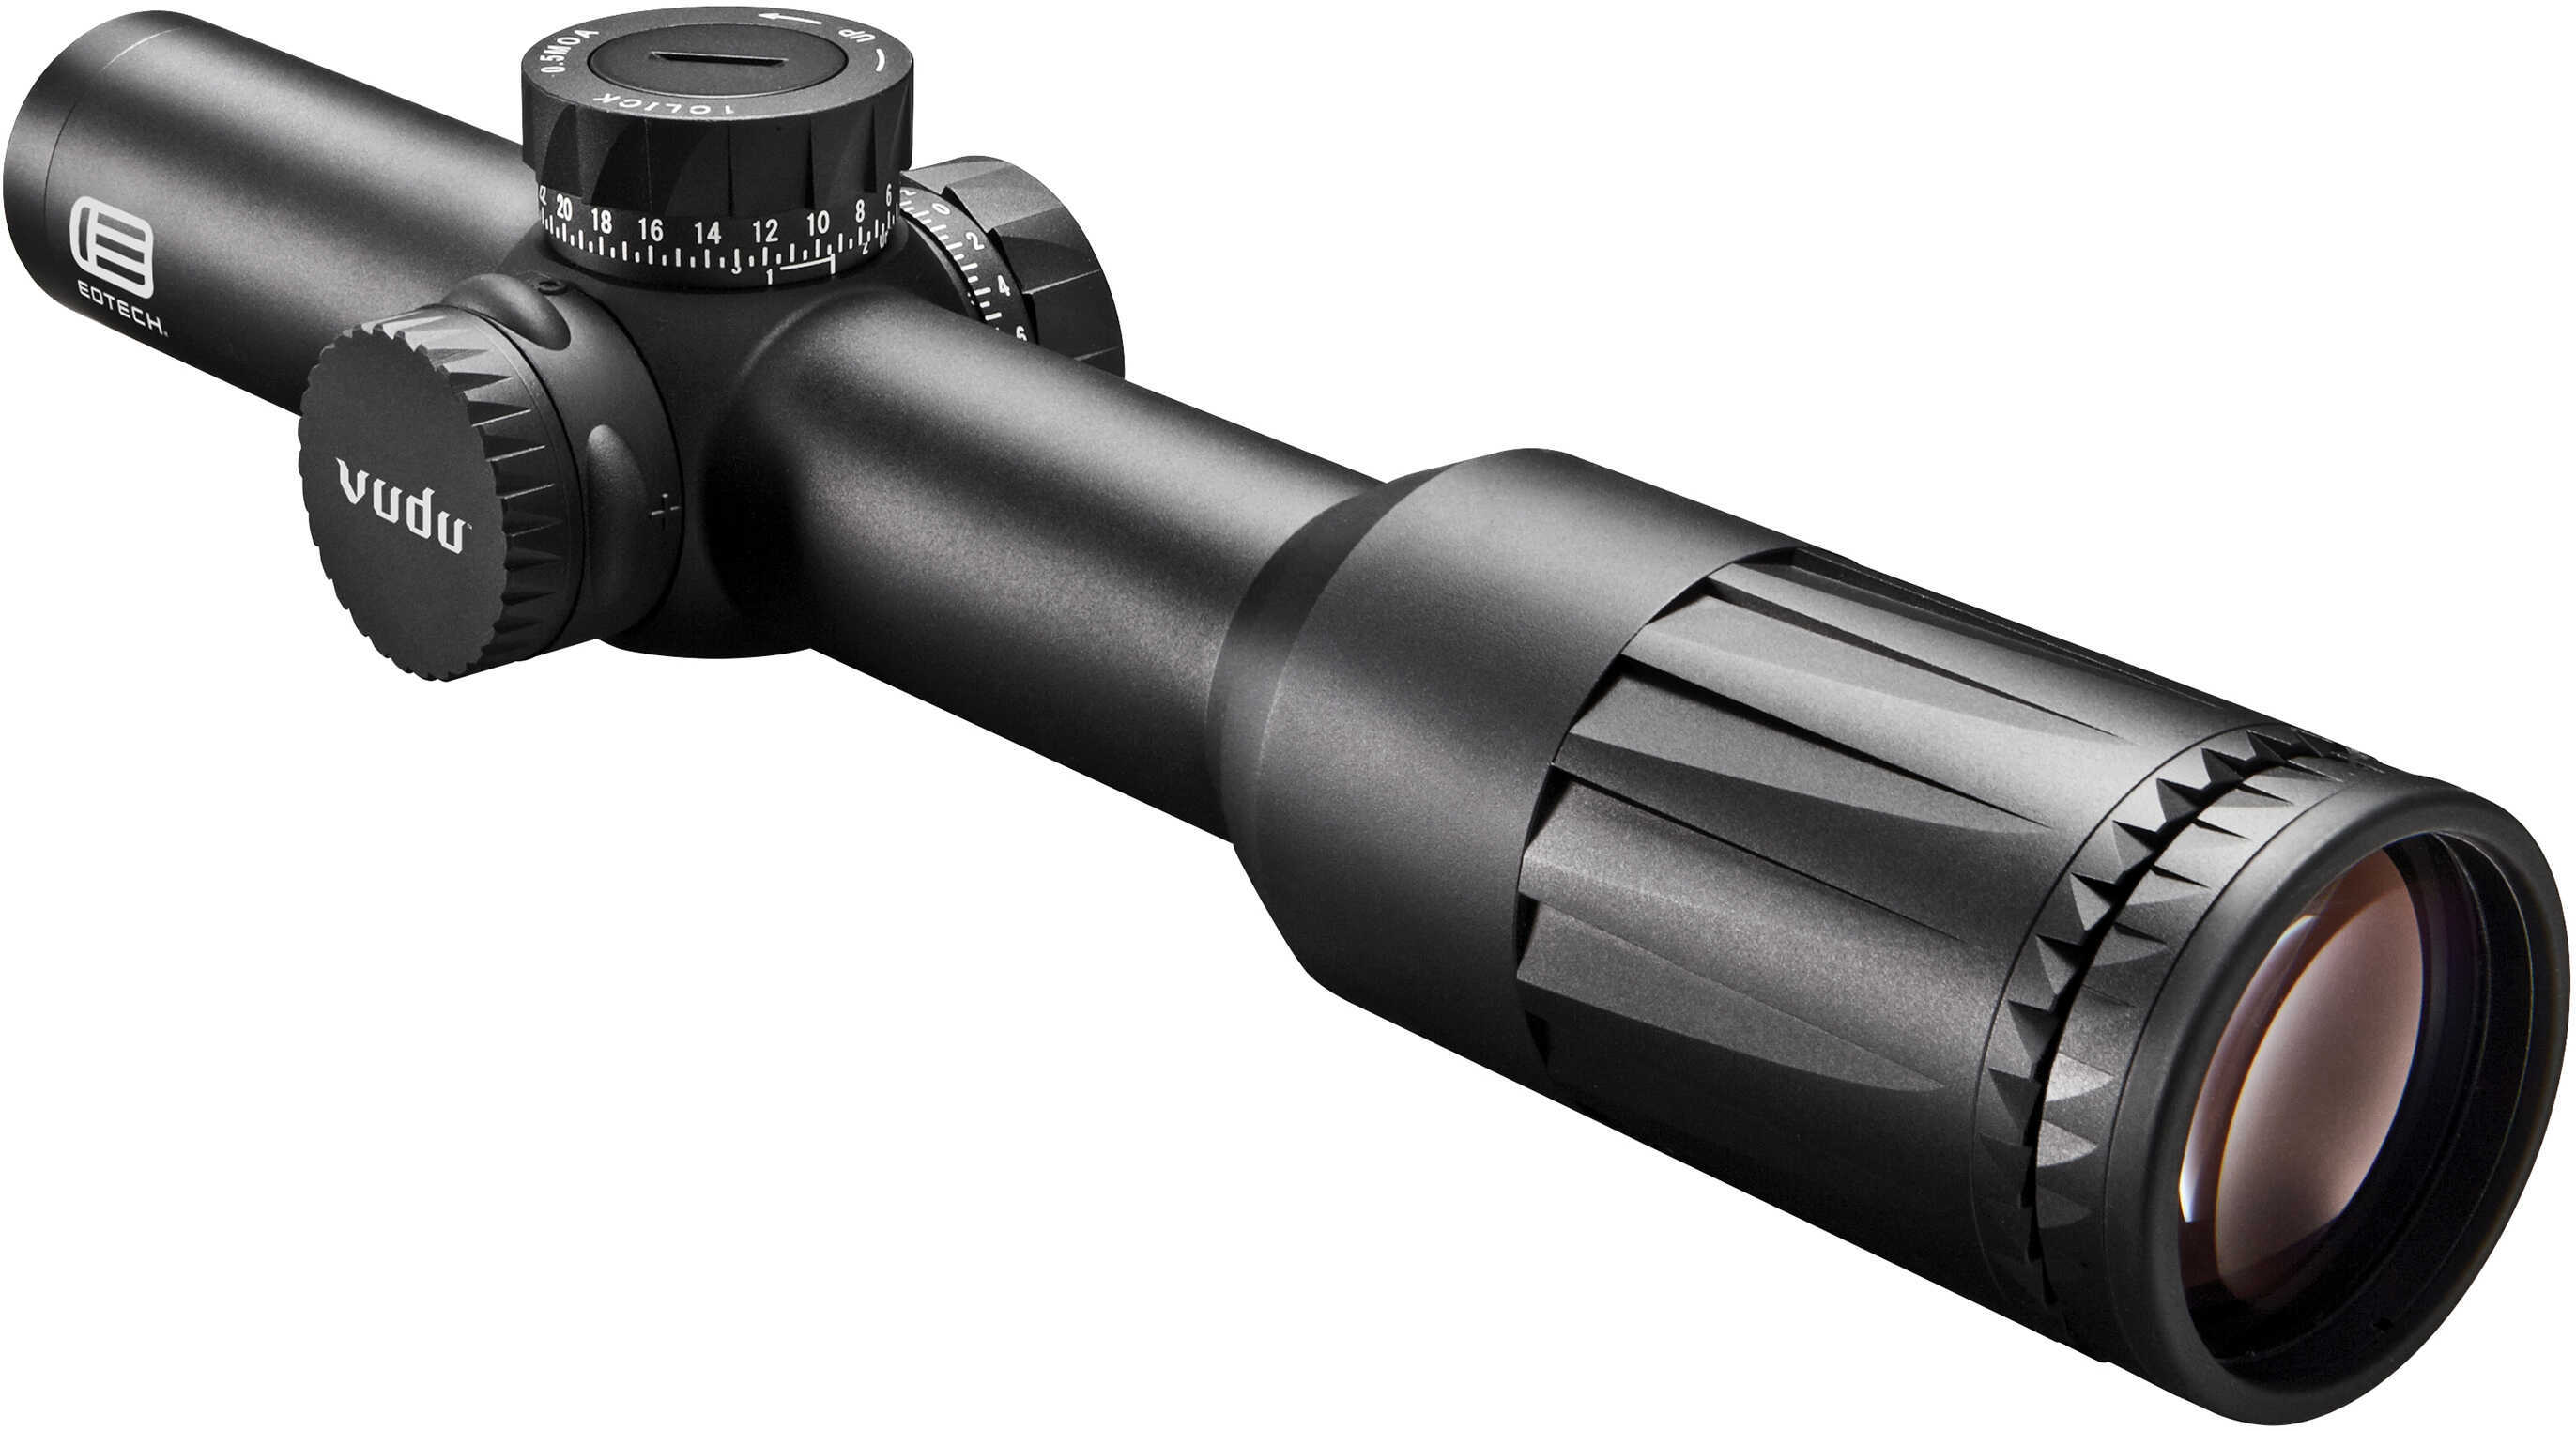 EOTECH VUDU 1-6X24 FFP Riflescope SR3 Reticle